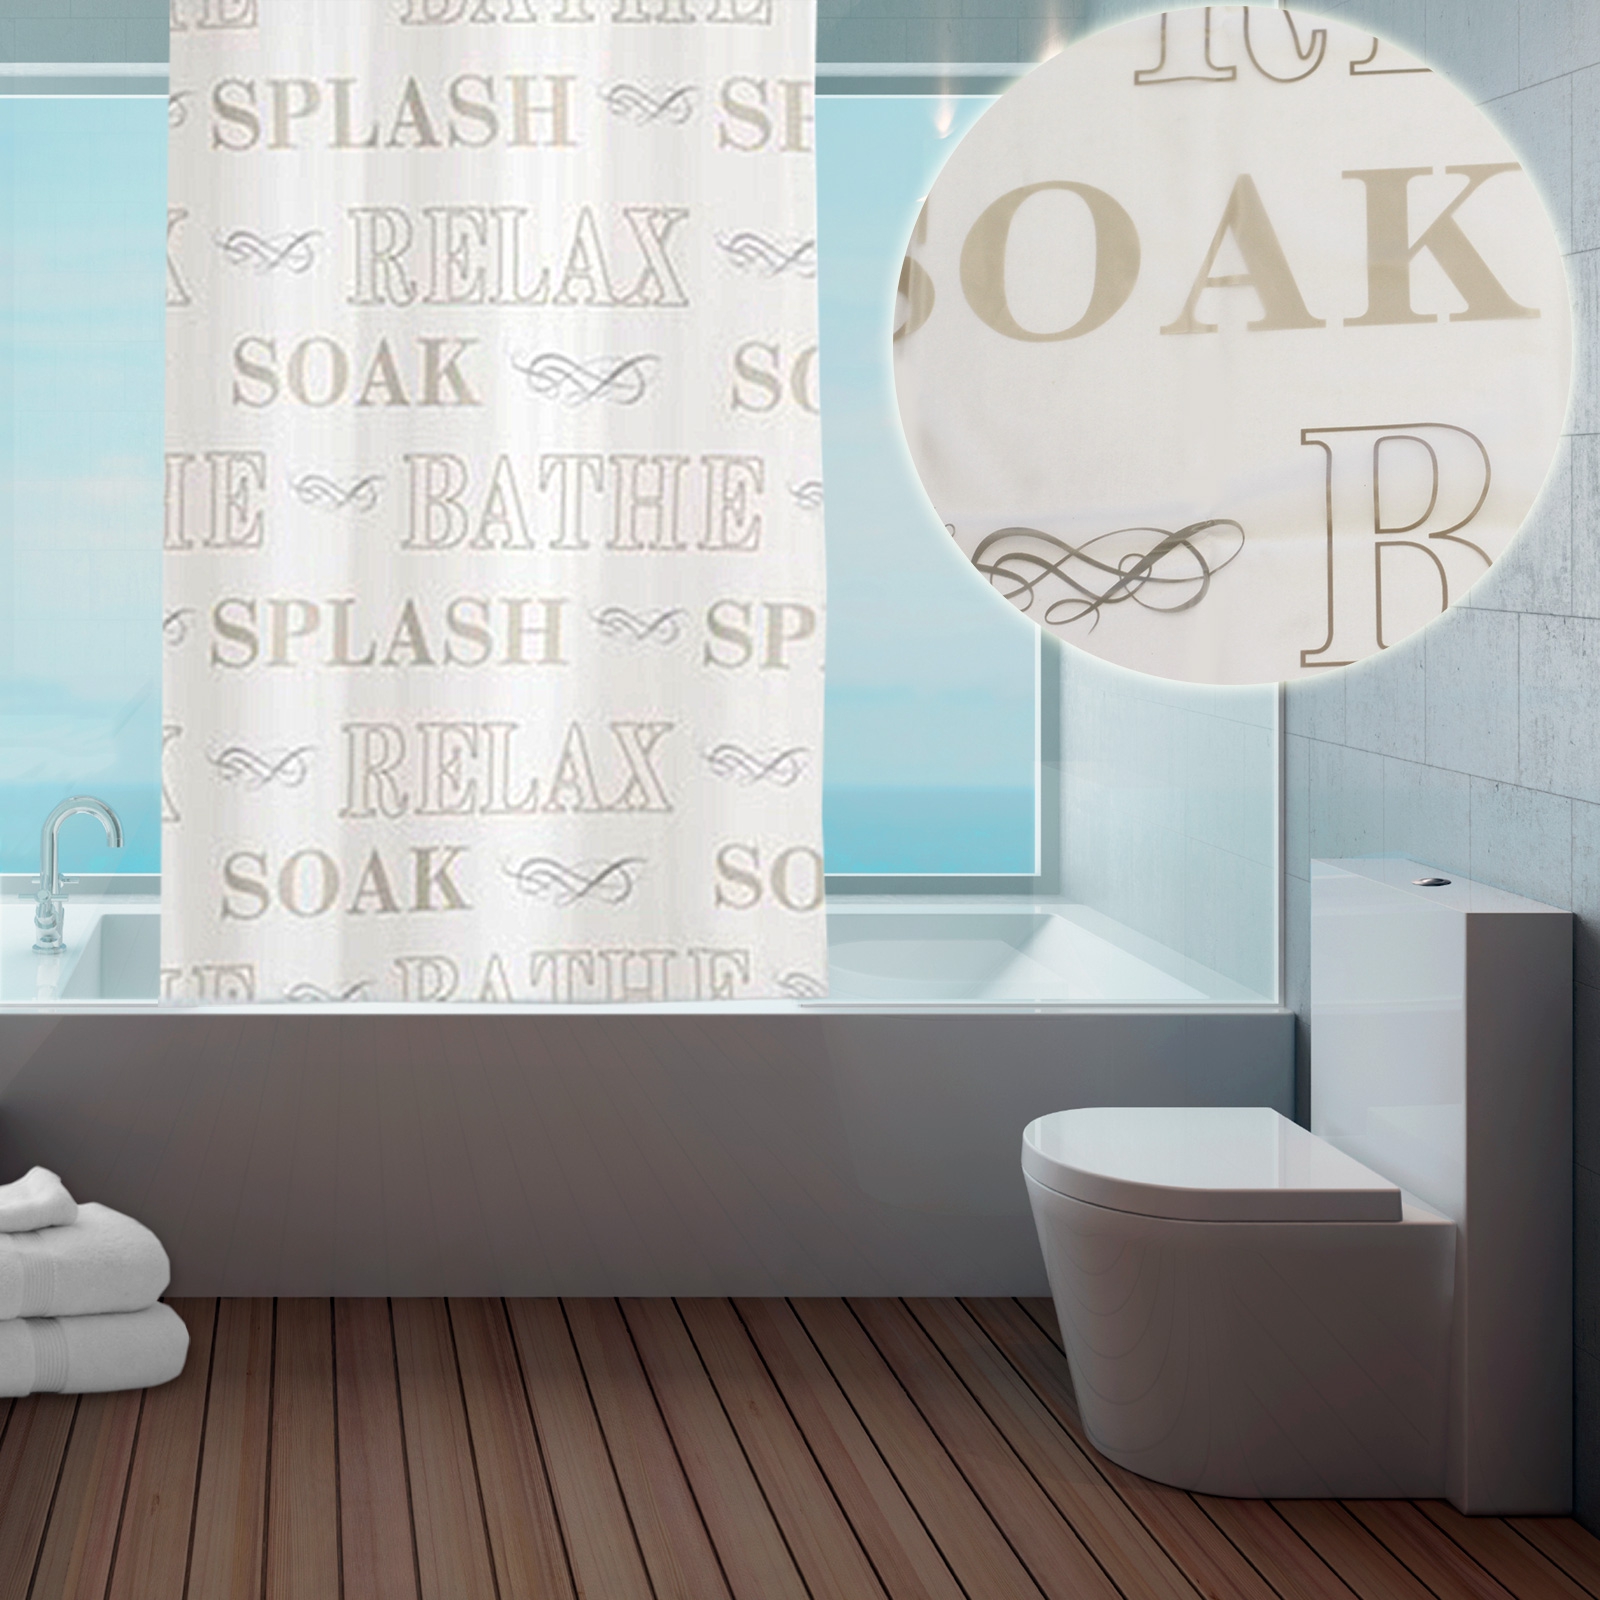 'Soak Splash Relax' with Hook Shower Curtain